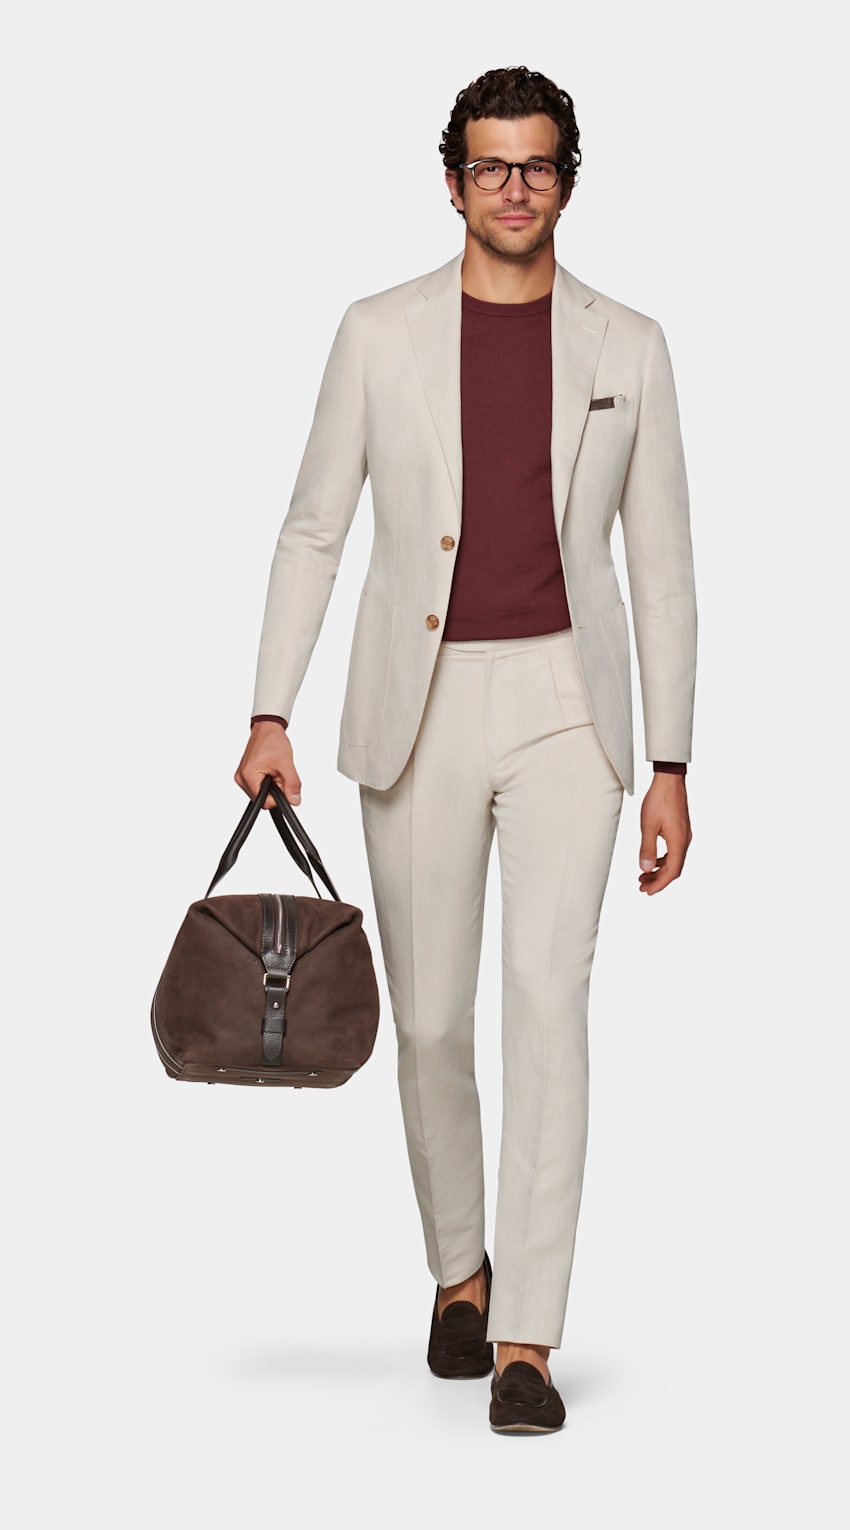 SUITSUPPLY Linen Cotton by Di Sondrio, Italy Light Brown Havana Suit